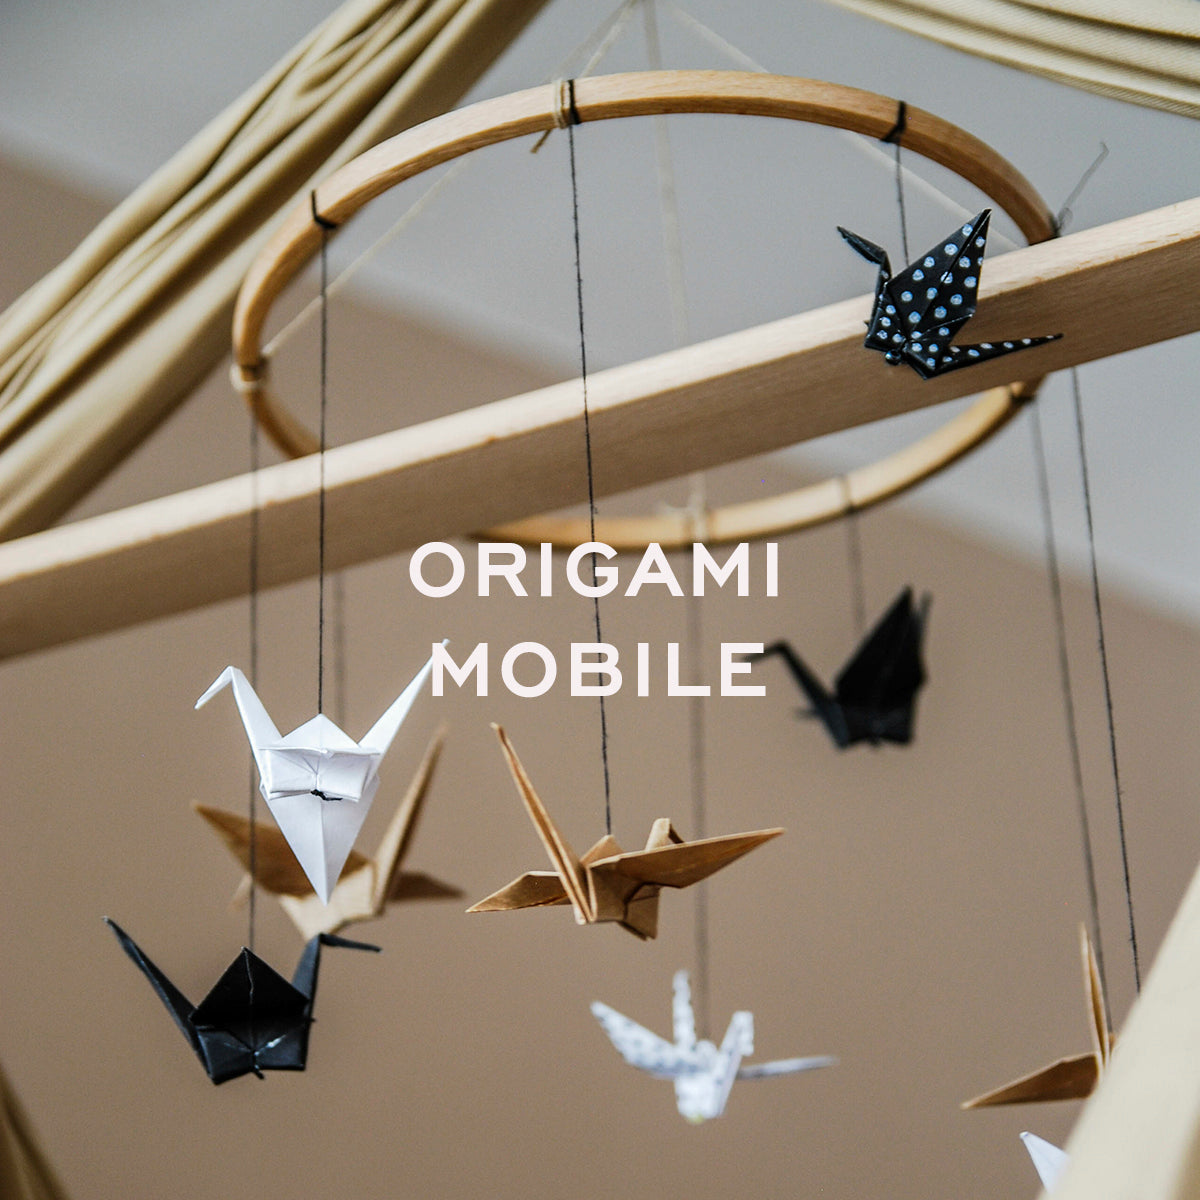 Origami Mobile